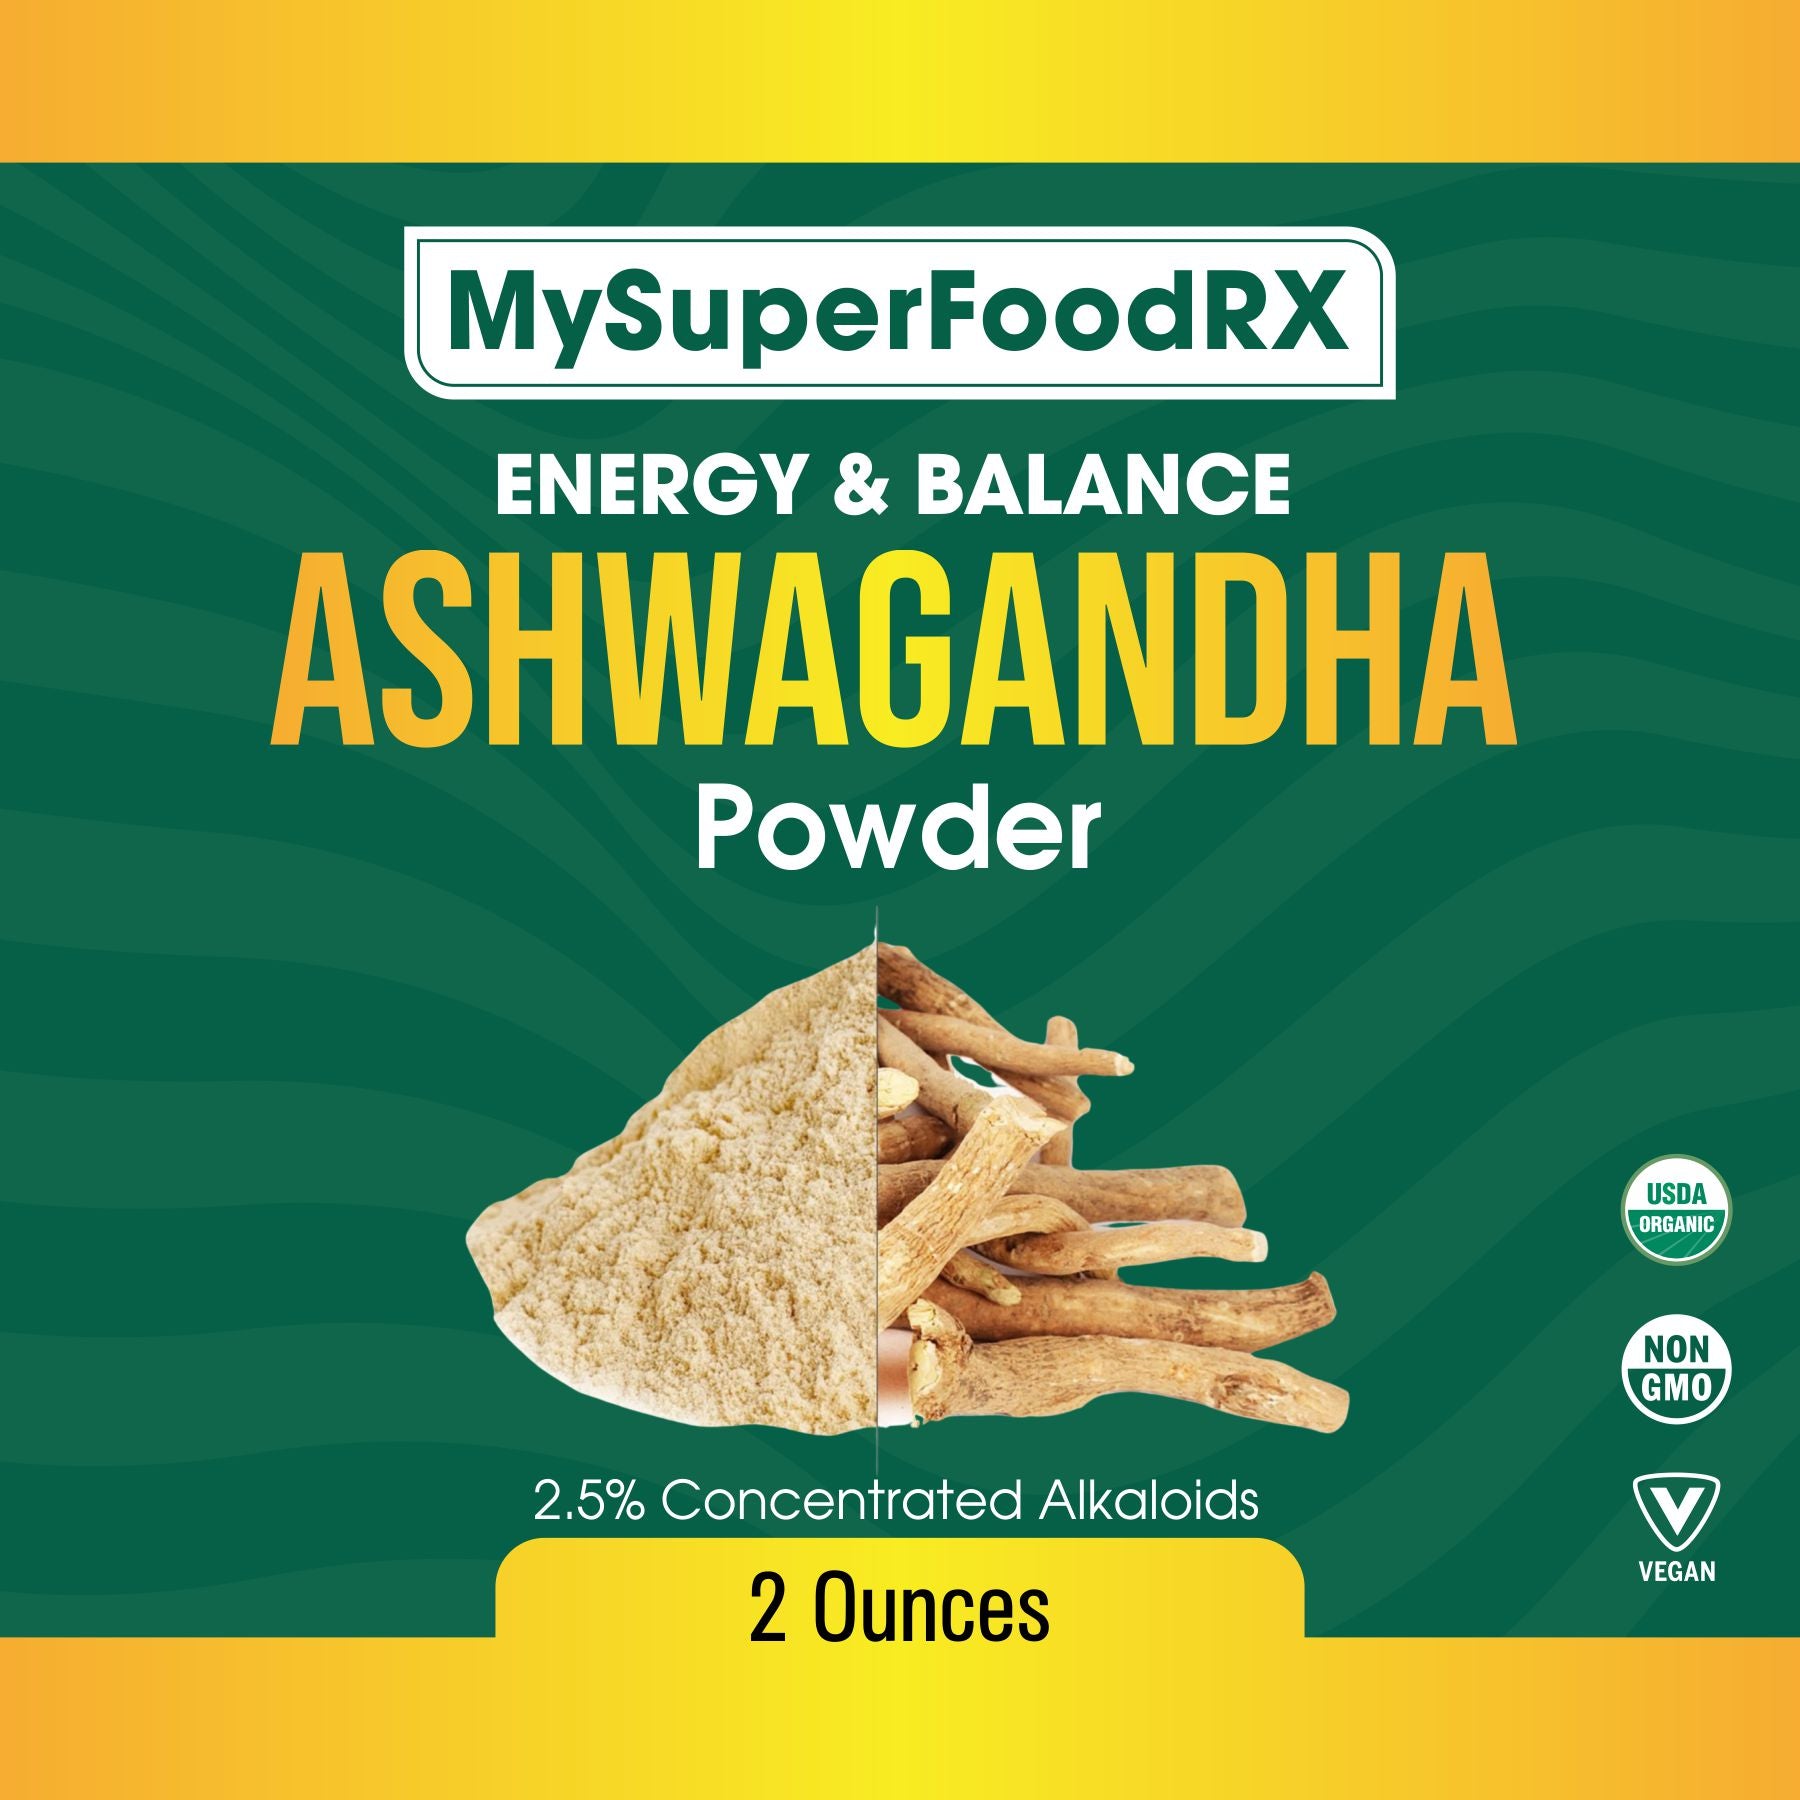 a bag of ashwagandhaa powder